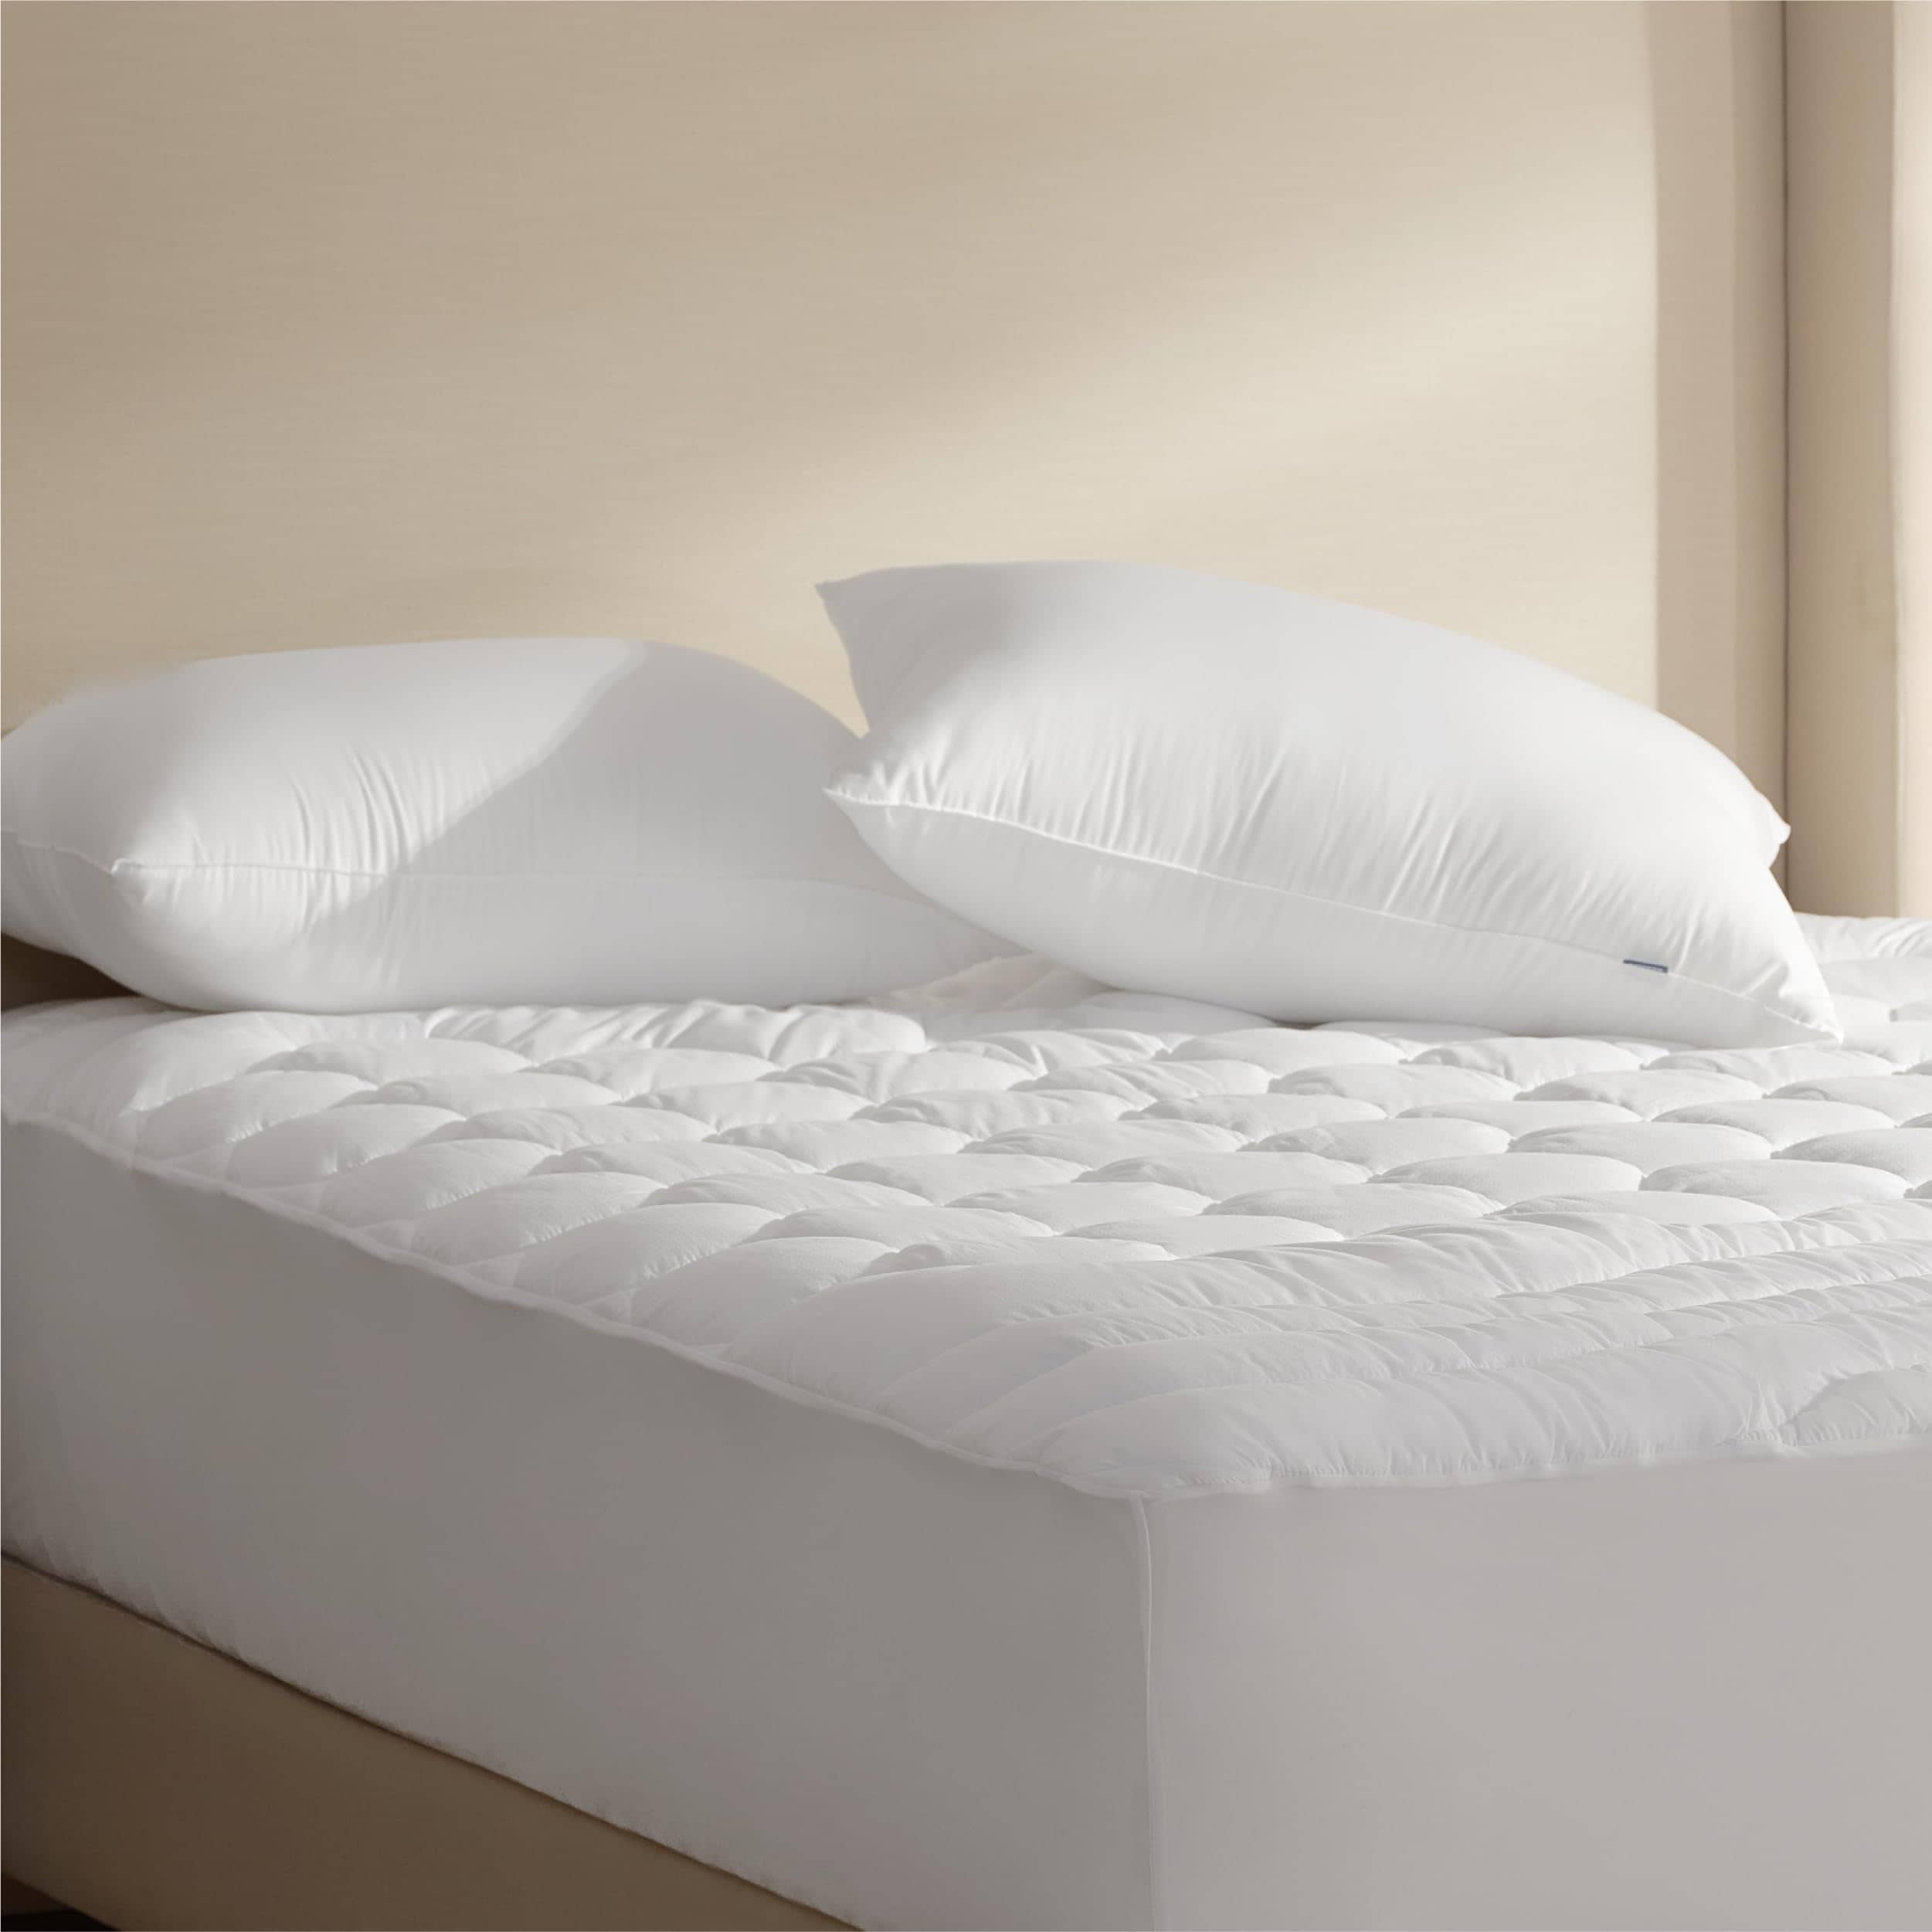 Bedsure Hotel Pillows